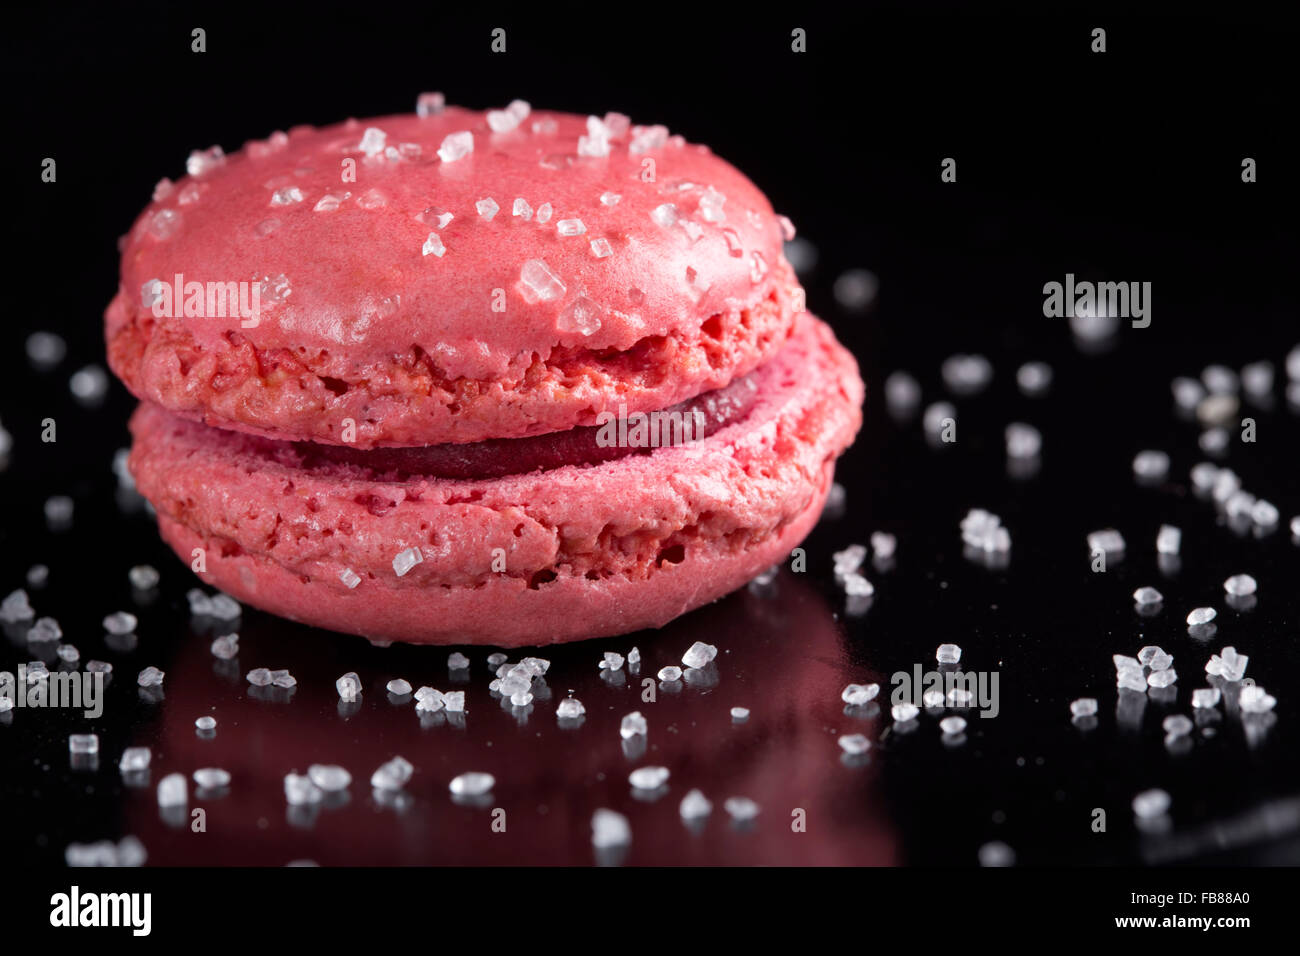 Pink macaroon cake an sugar over black background Stock Photo